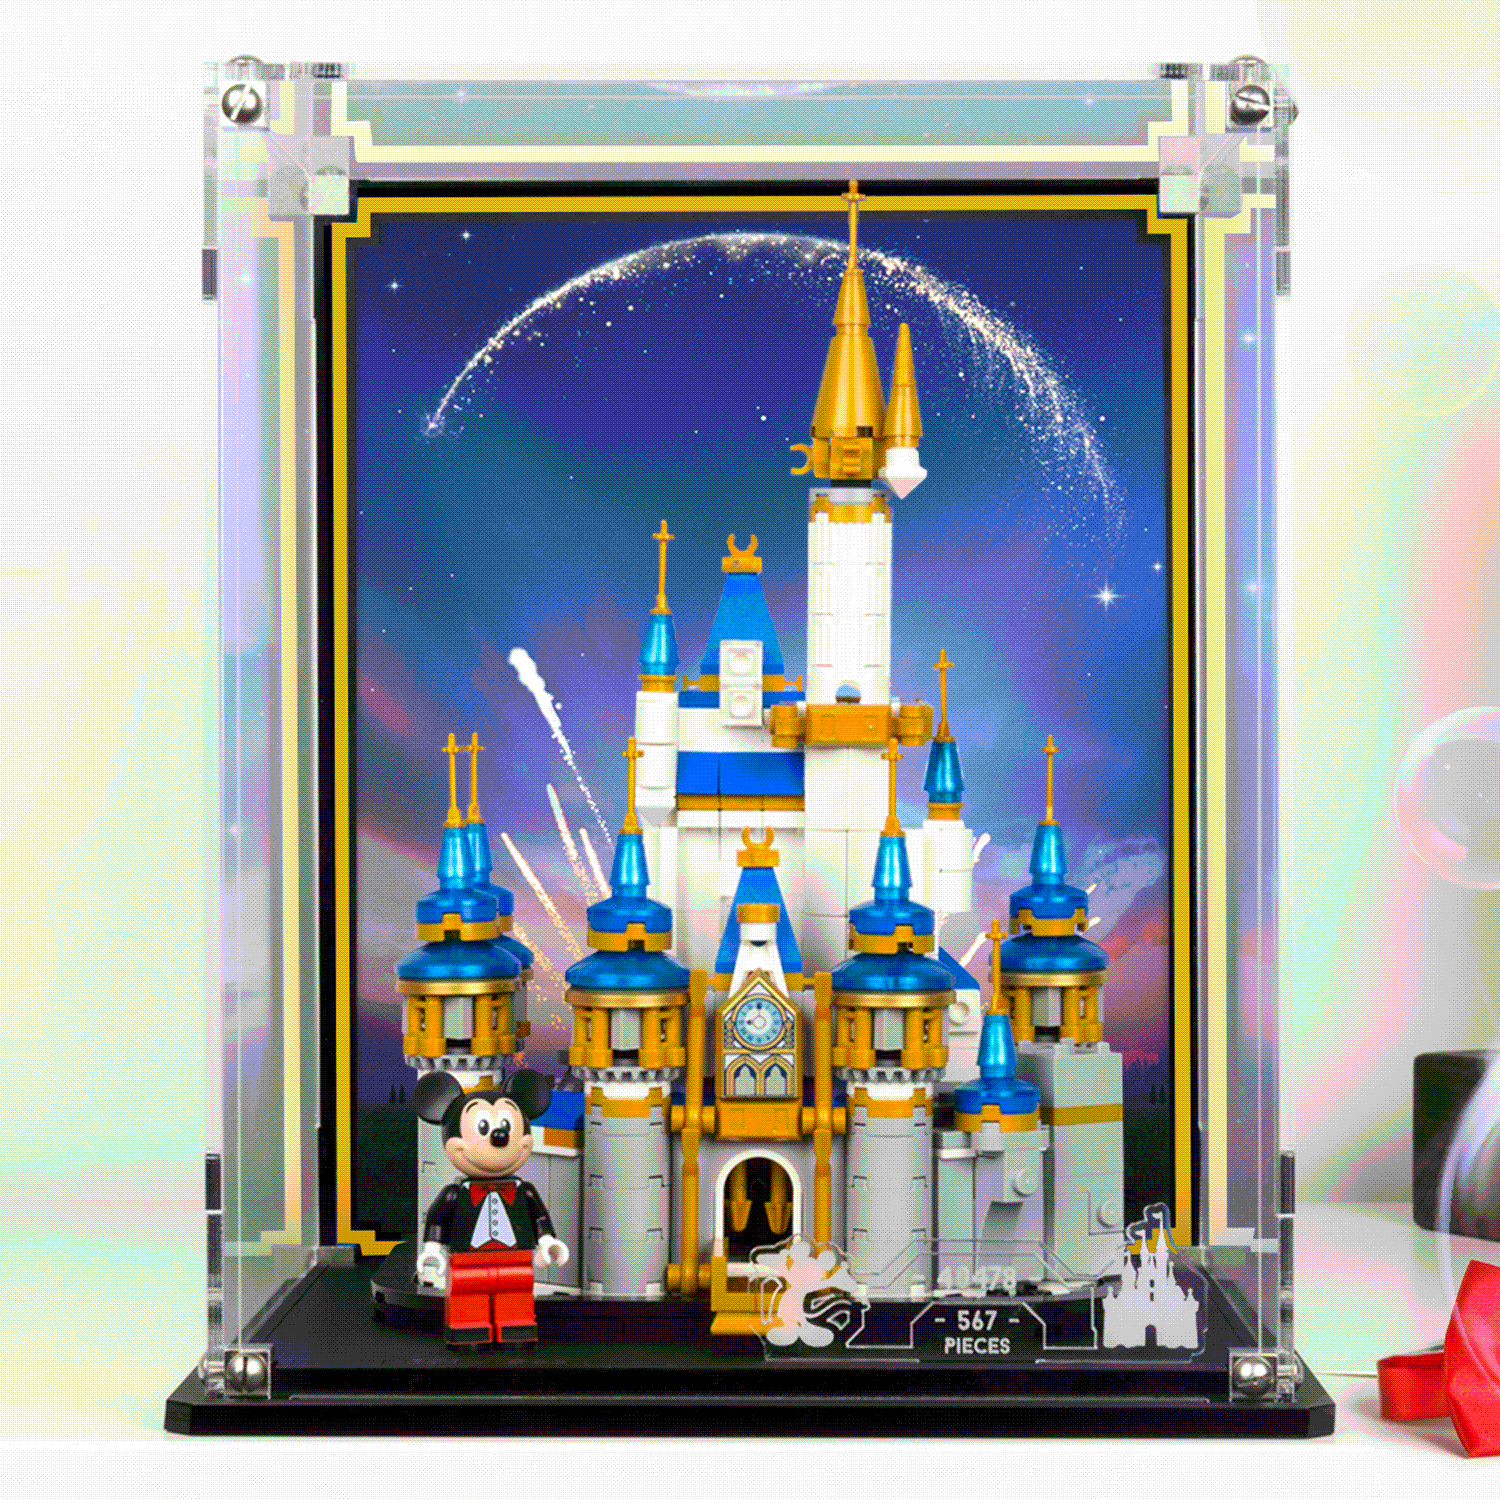 Acrylic Castle display frame insert for Lego Disney minifigures 